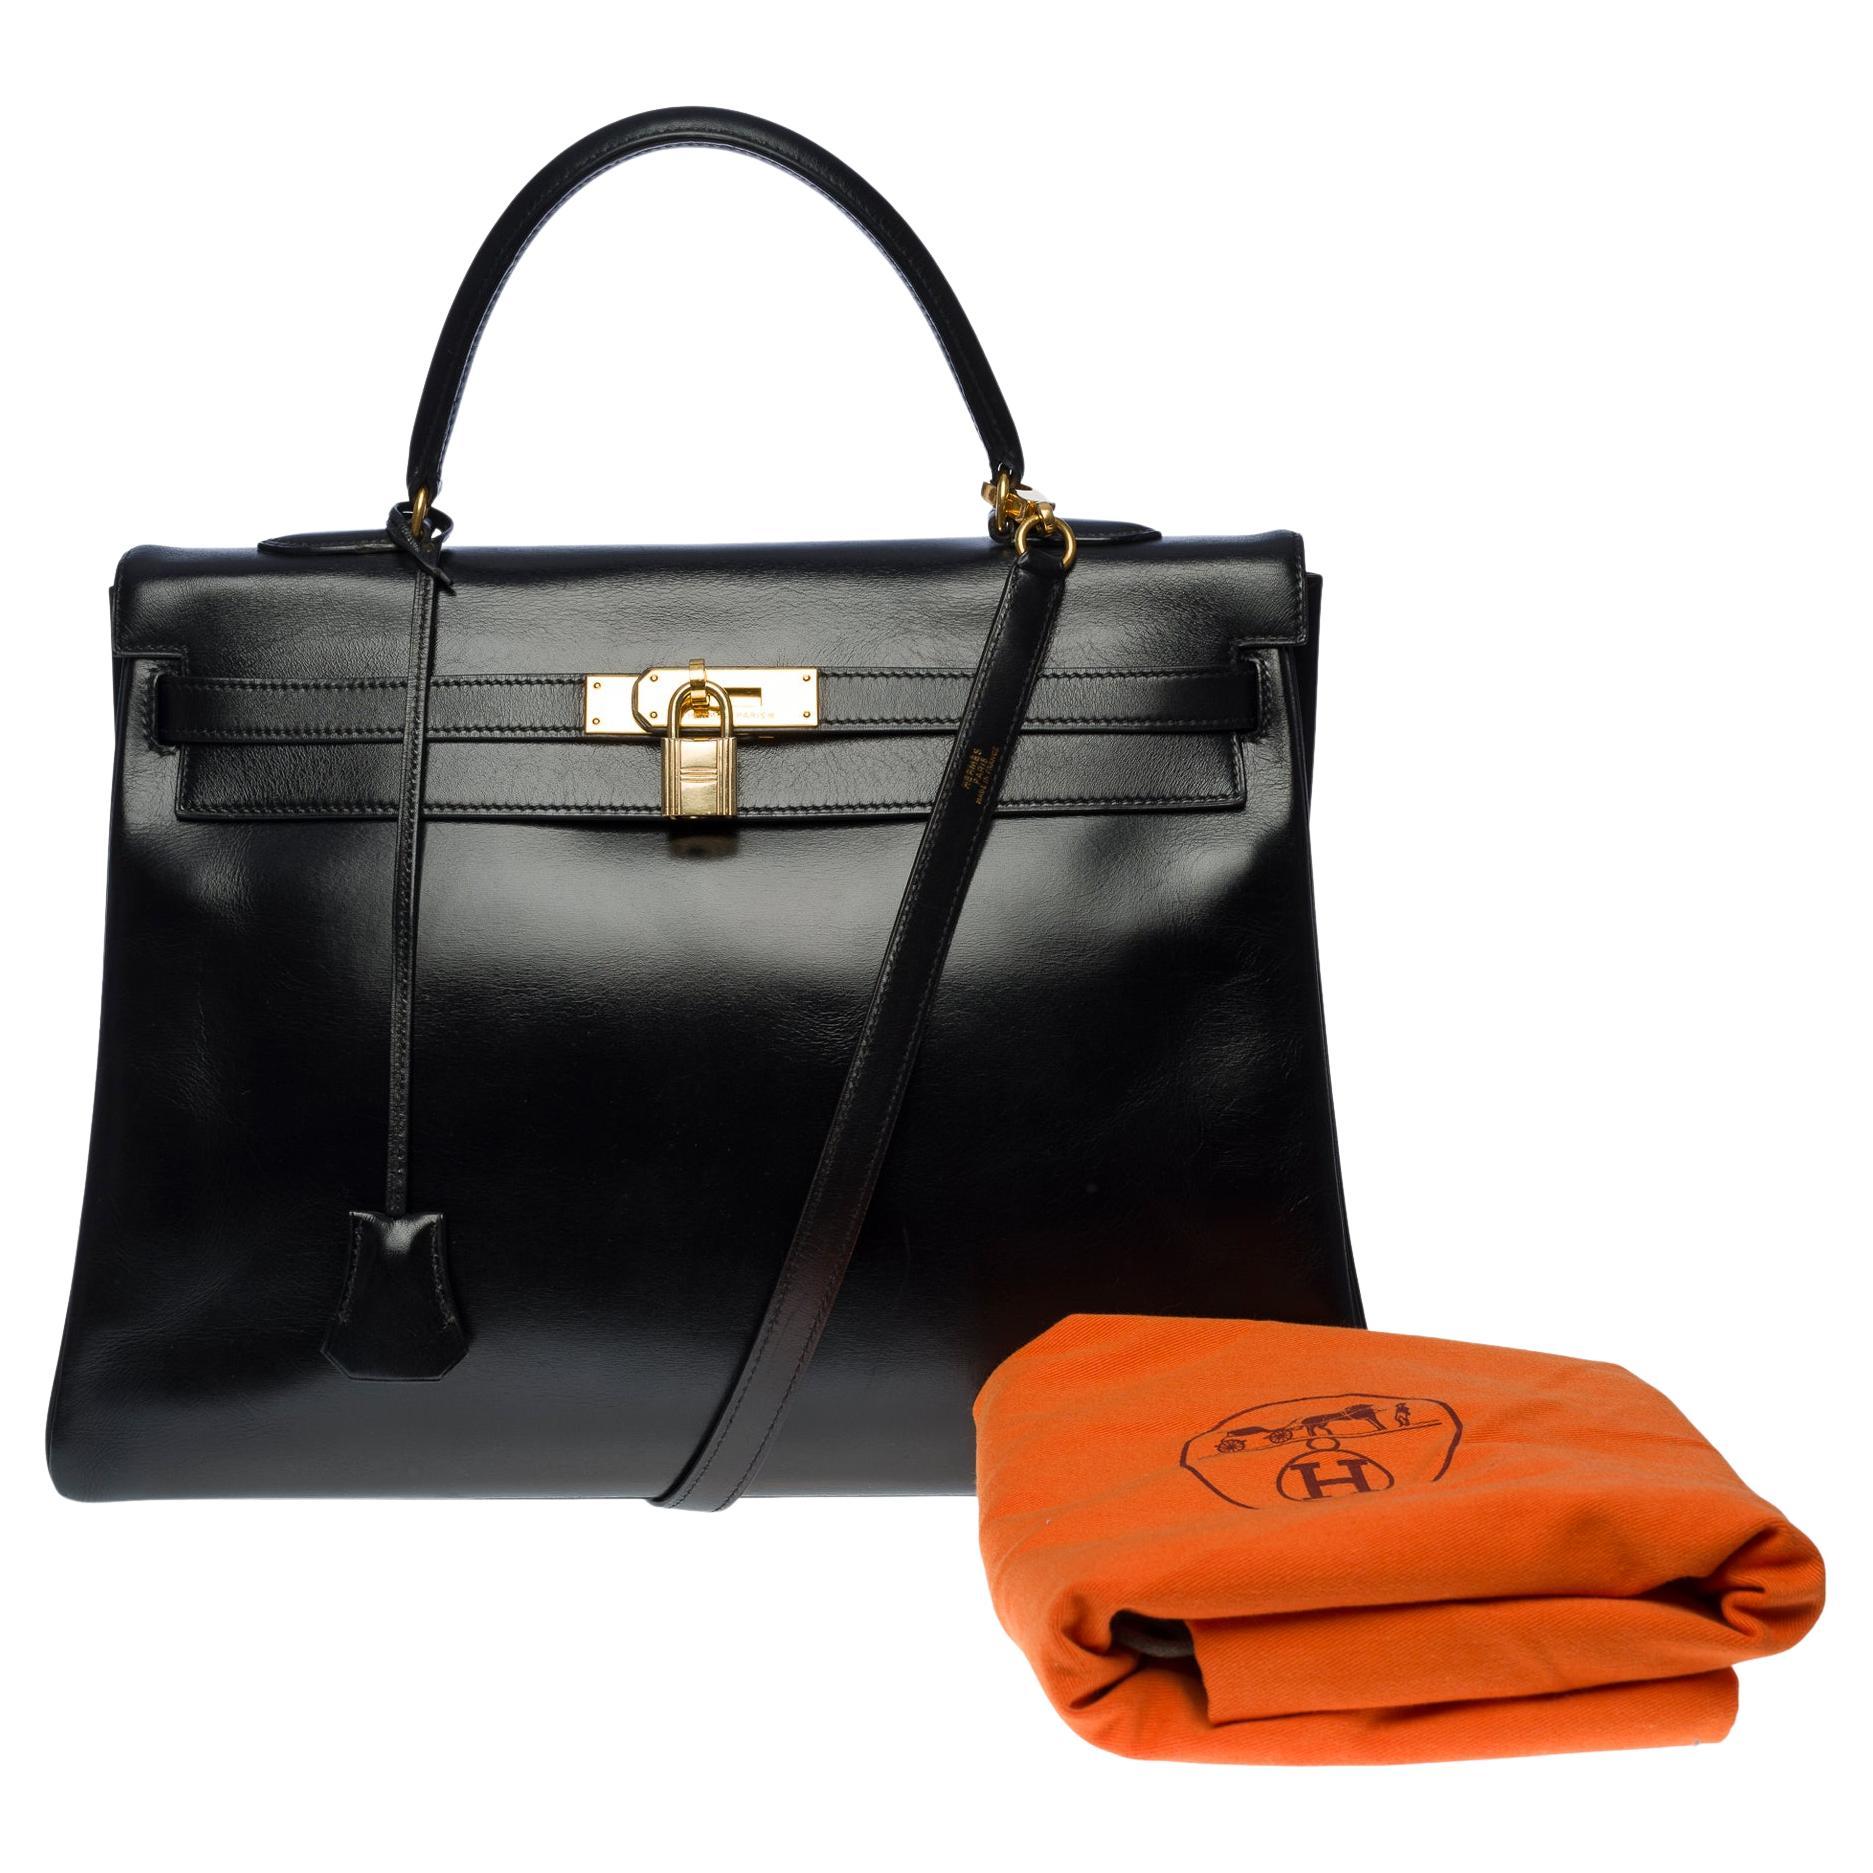 Gorgeous Hermès Kelly 35 retourne handbag strap in black calfskin leather, GHW